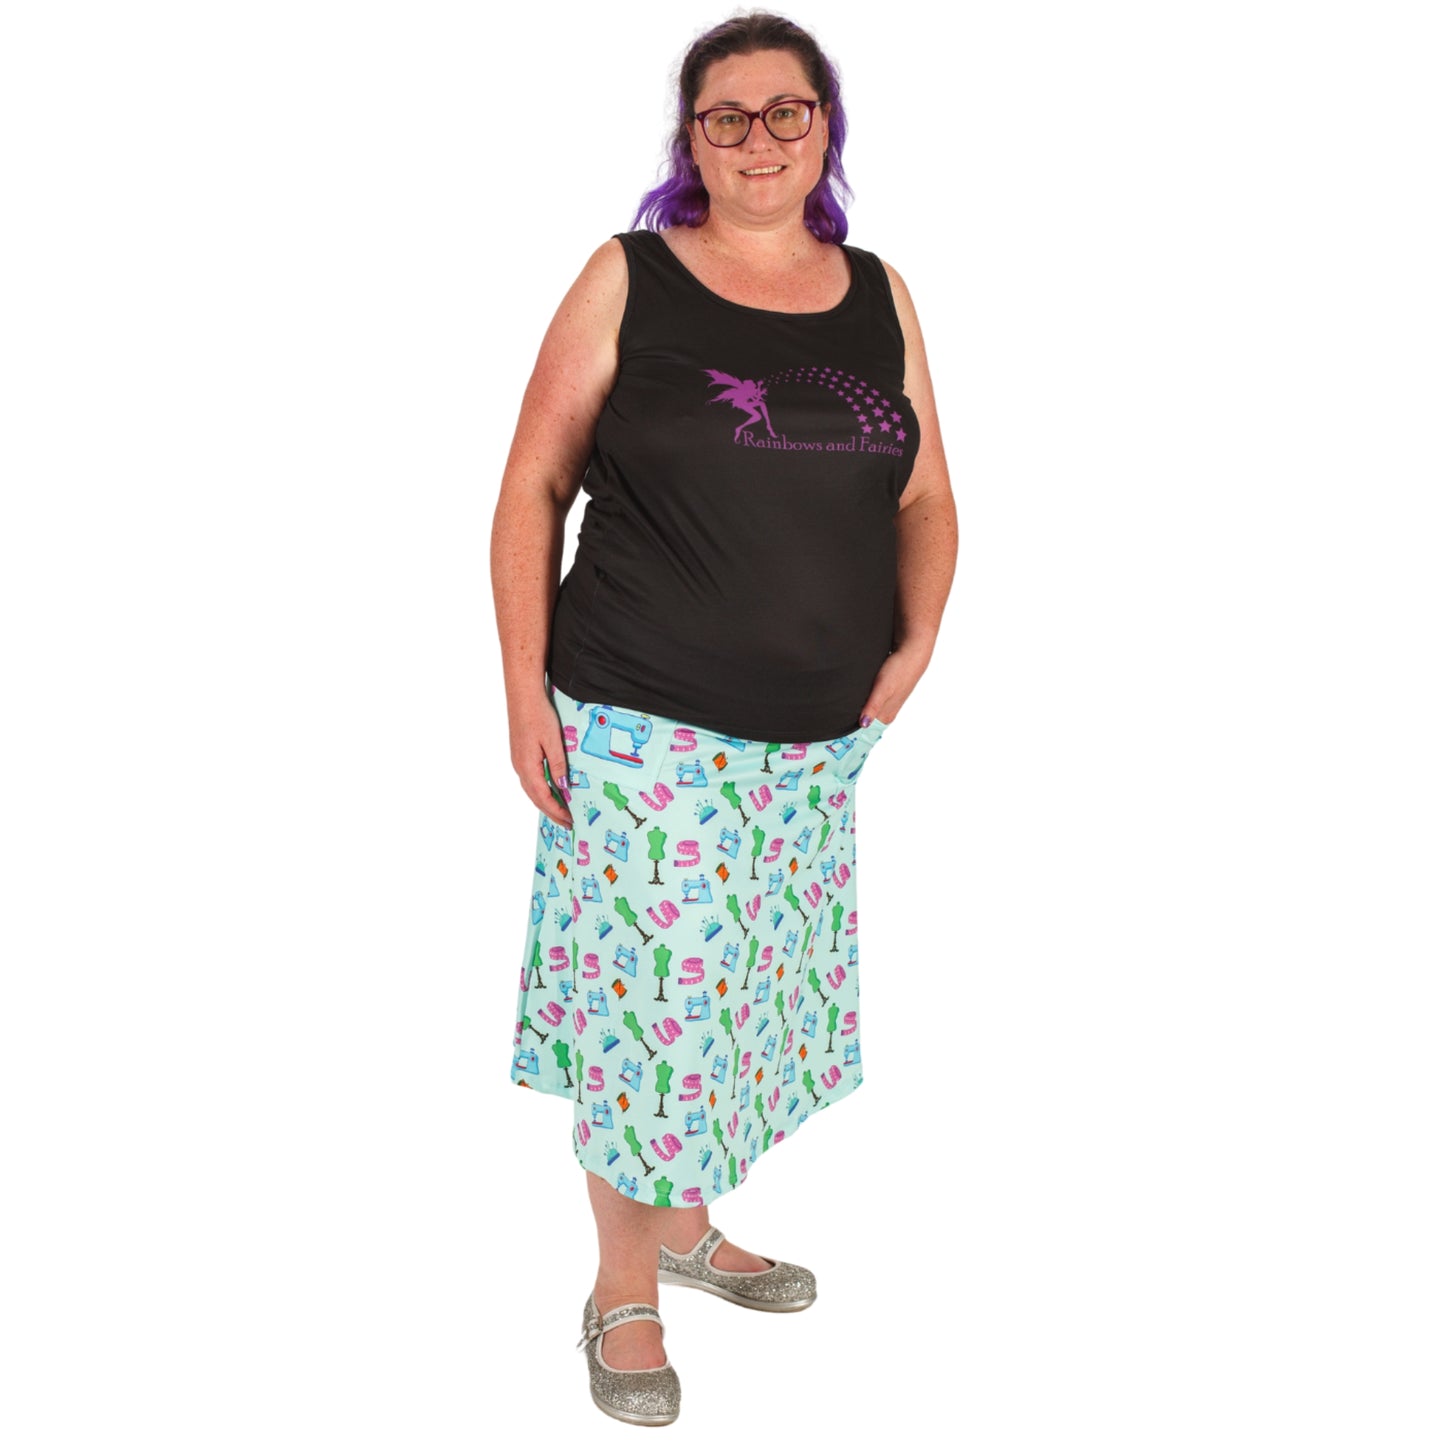 Haberdashery Original Skirt by RainbowsAndFairies.com.au (Sewing - Dress Making - Skirt With Pockets - Kitsch) - SKU: CL_OSKRT_HABER_ORG - Pic-04